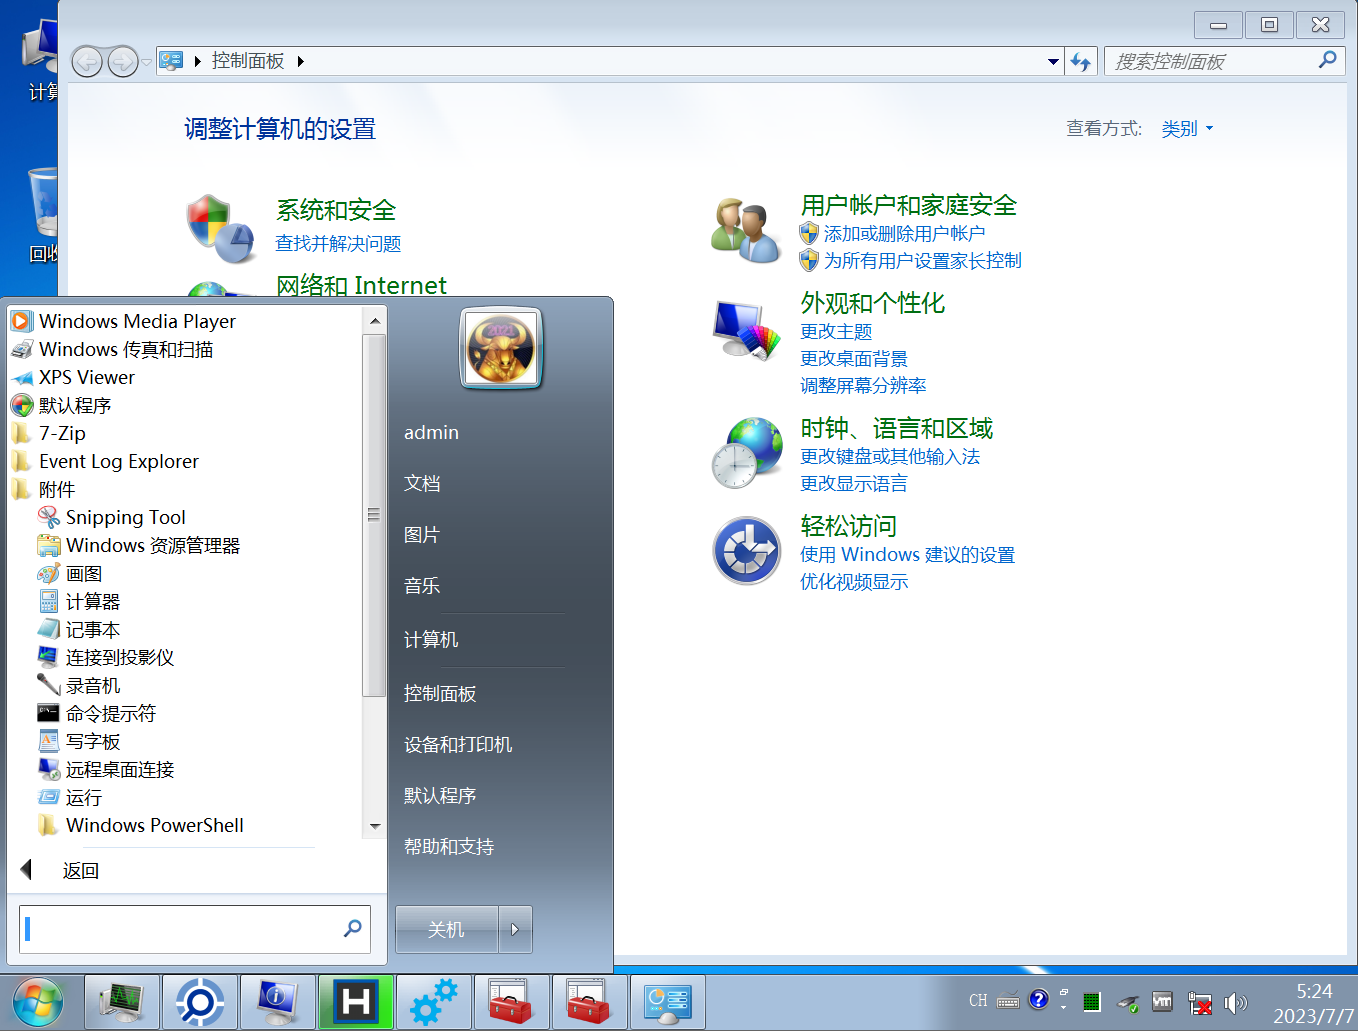 【匿名】Windows 7 Professional SP1 7601.24540 x86-x64 ZH-CN SM